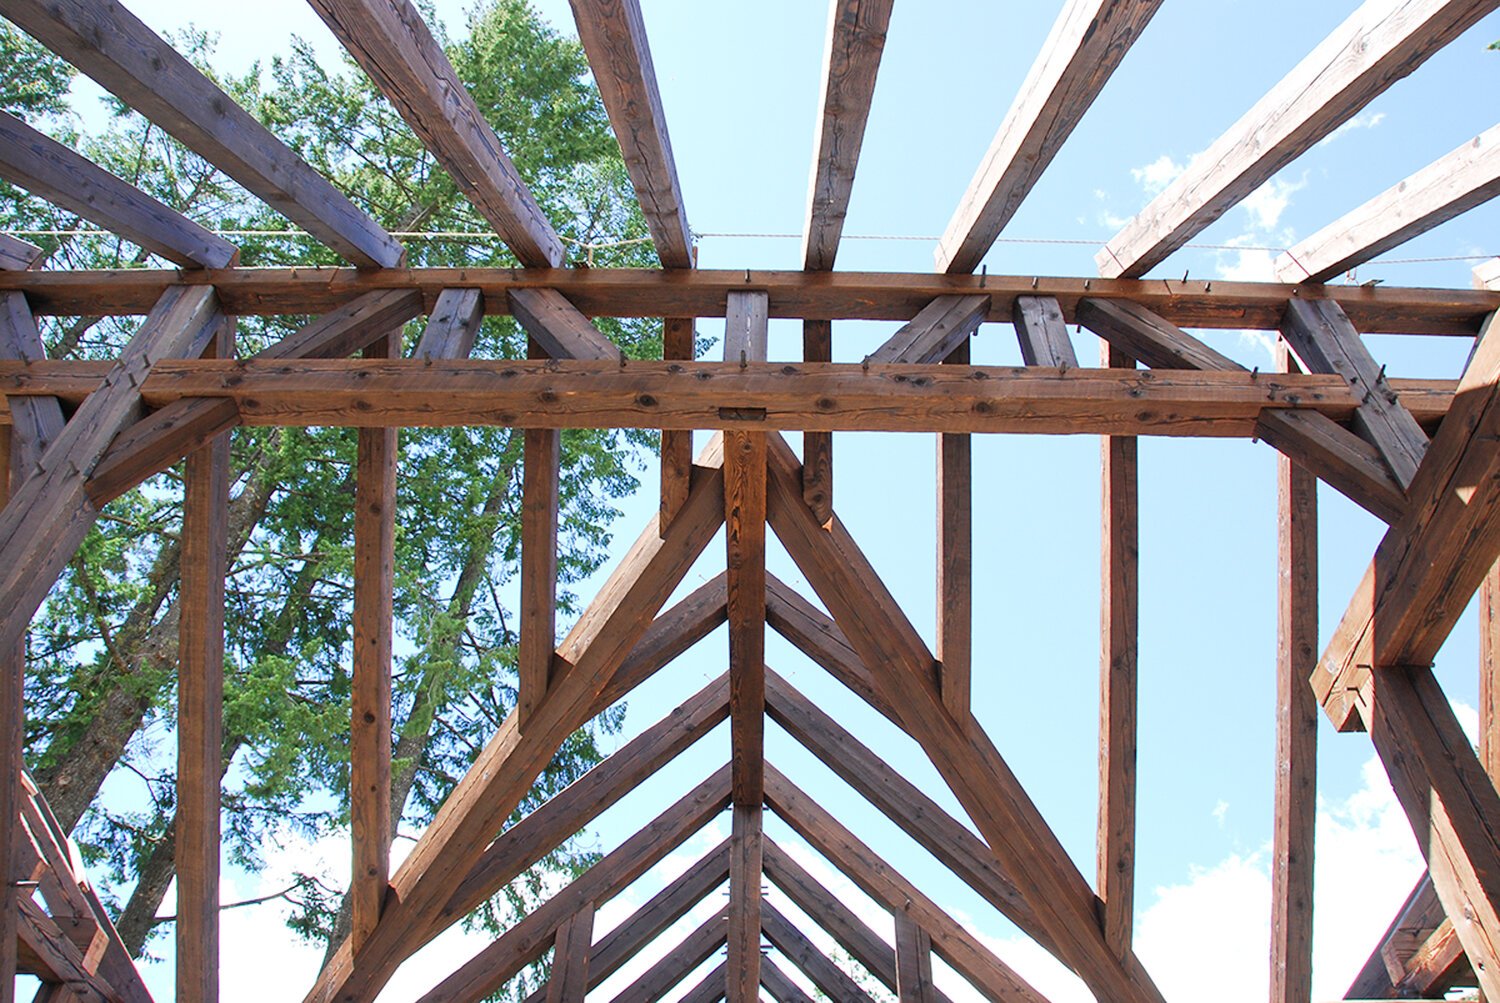 hope-idaho-collin-beggs-timber-framing-design-build-5-LoRes.jpg